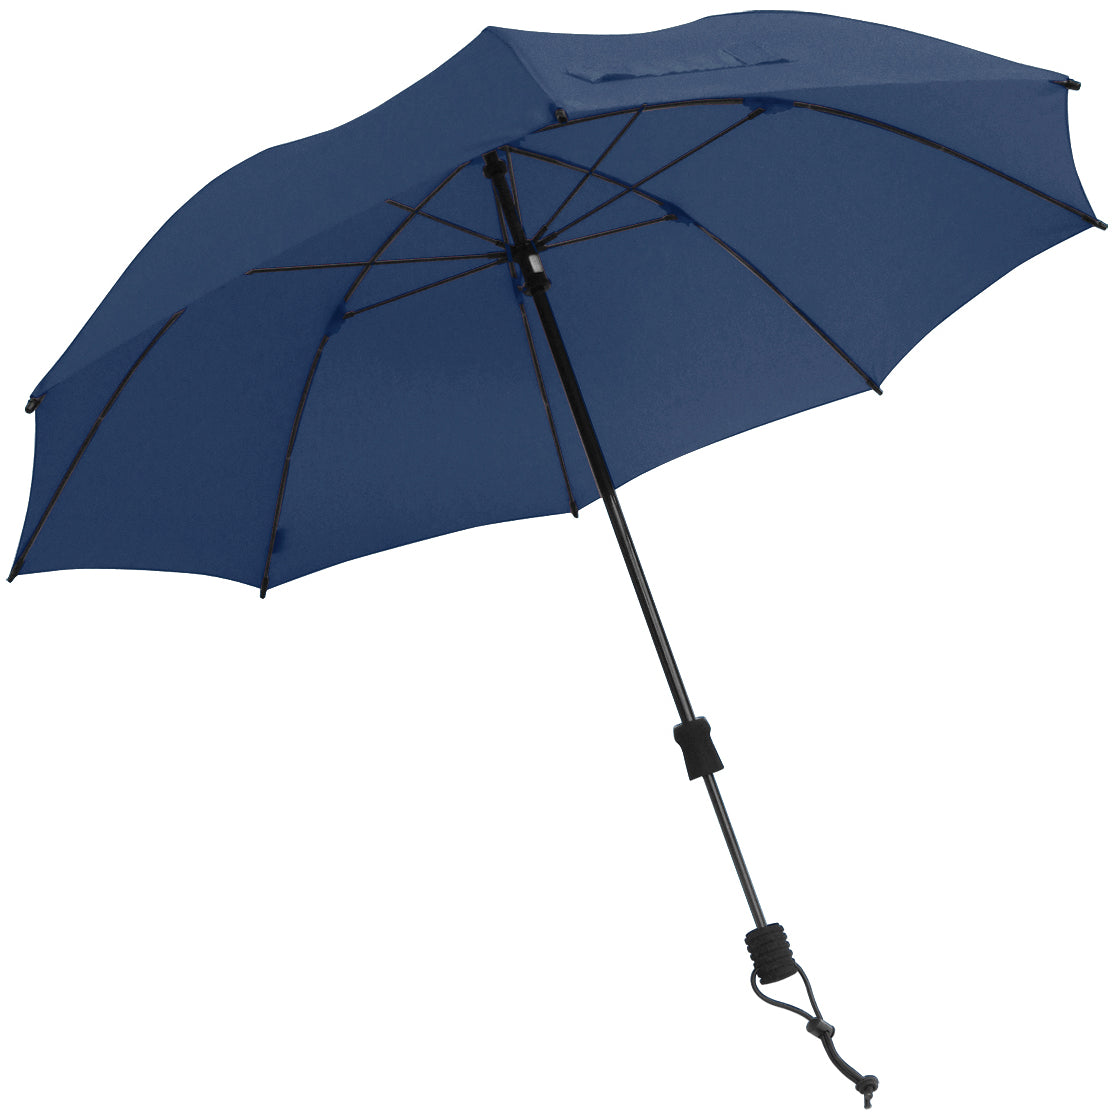 Hands-free umbrella rigging –